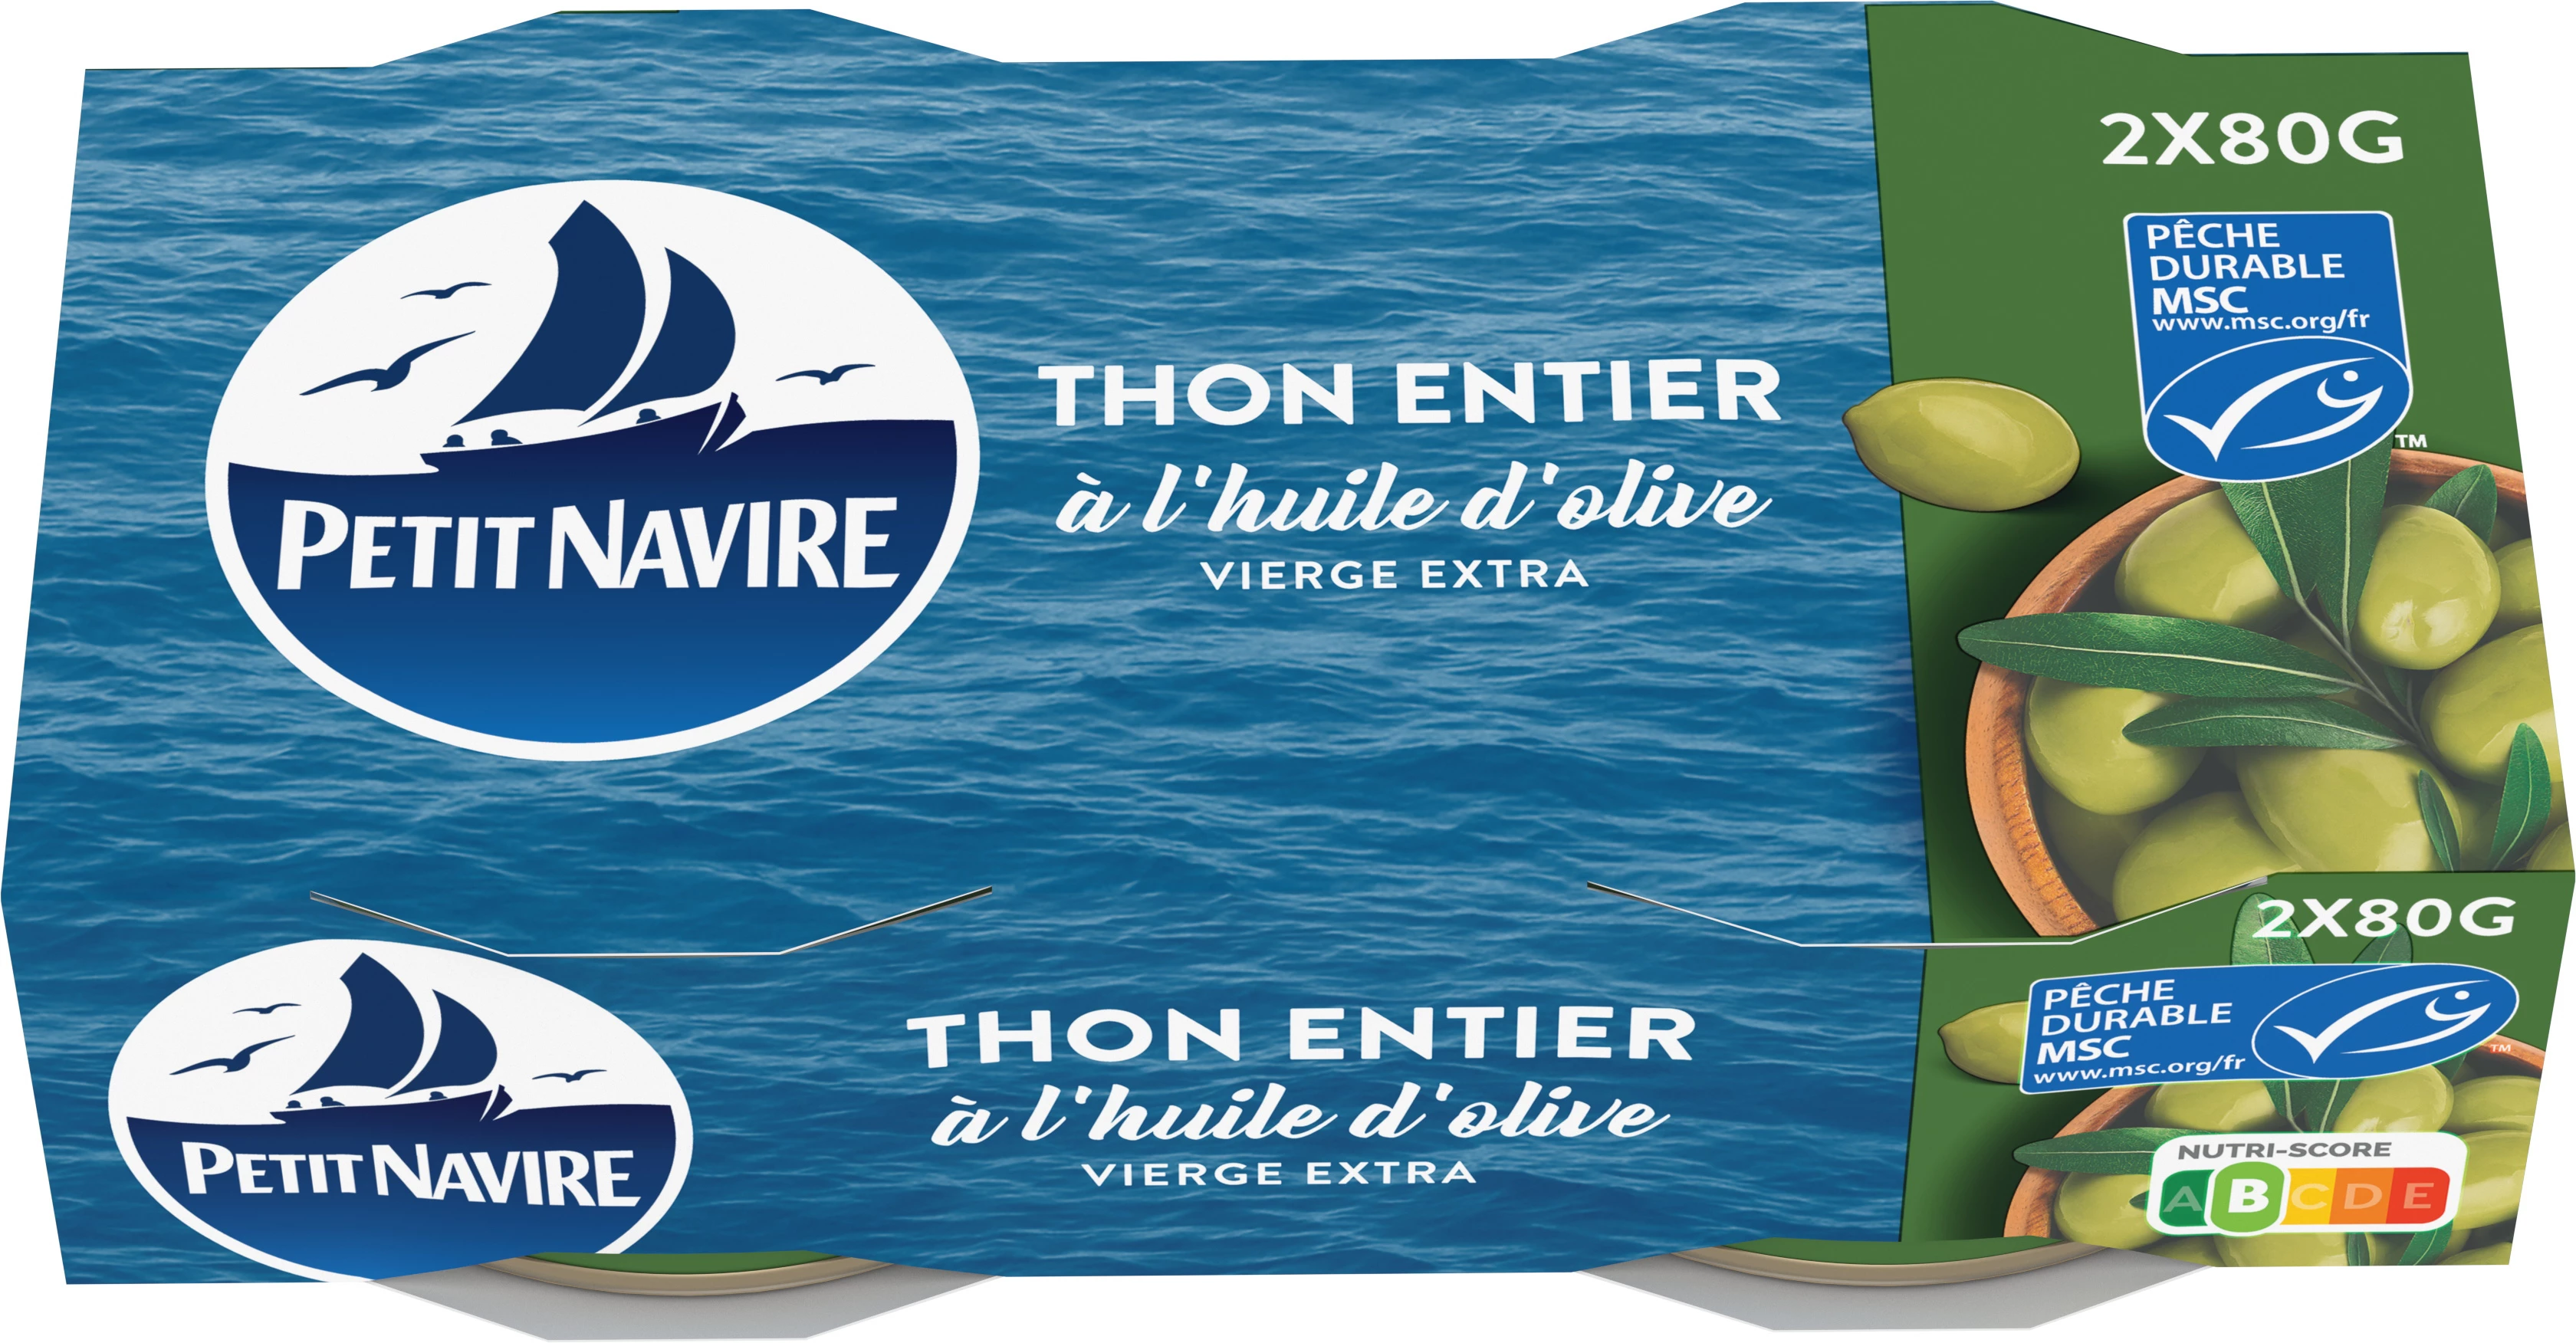 Thunfisch in nativem Olivenöl extra, 160g -  PETIT NAVIRE